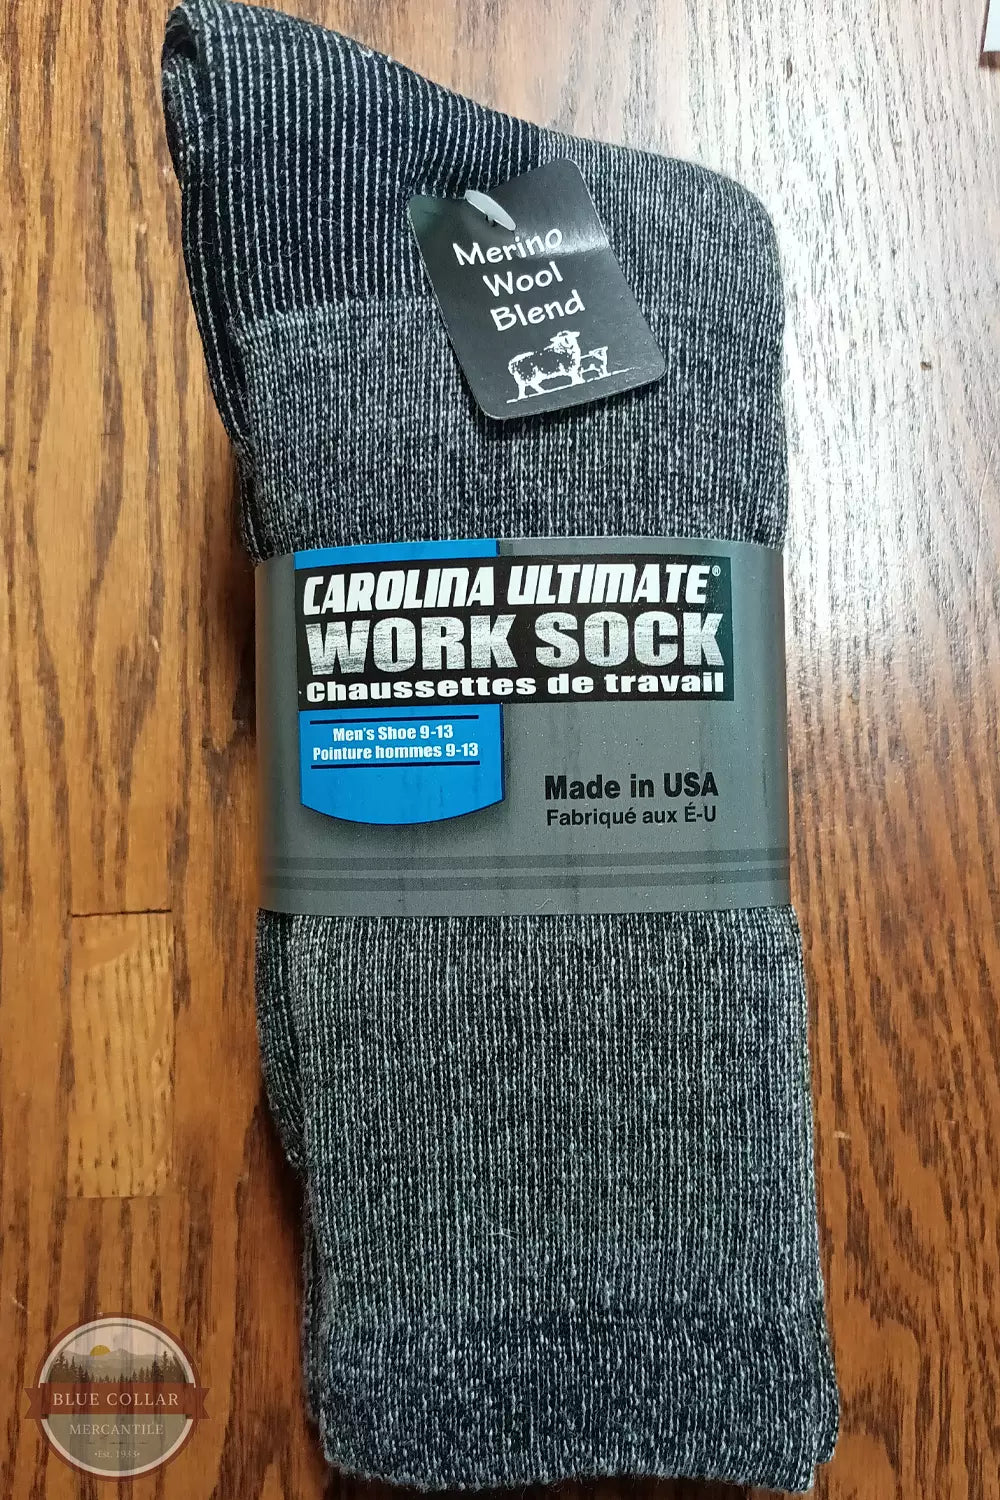 Carolina Ultimate 28791 Ultimate Merino Wool Blend Socks 2 Pack in Charcoal Product View